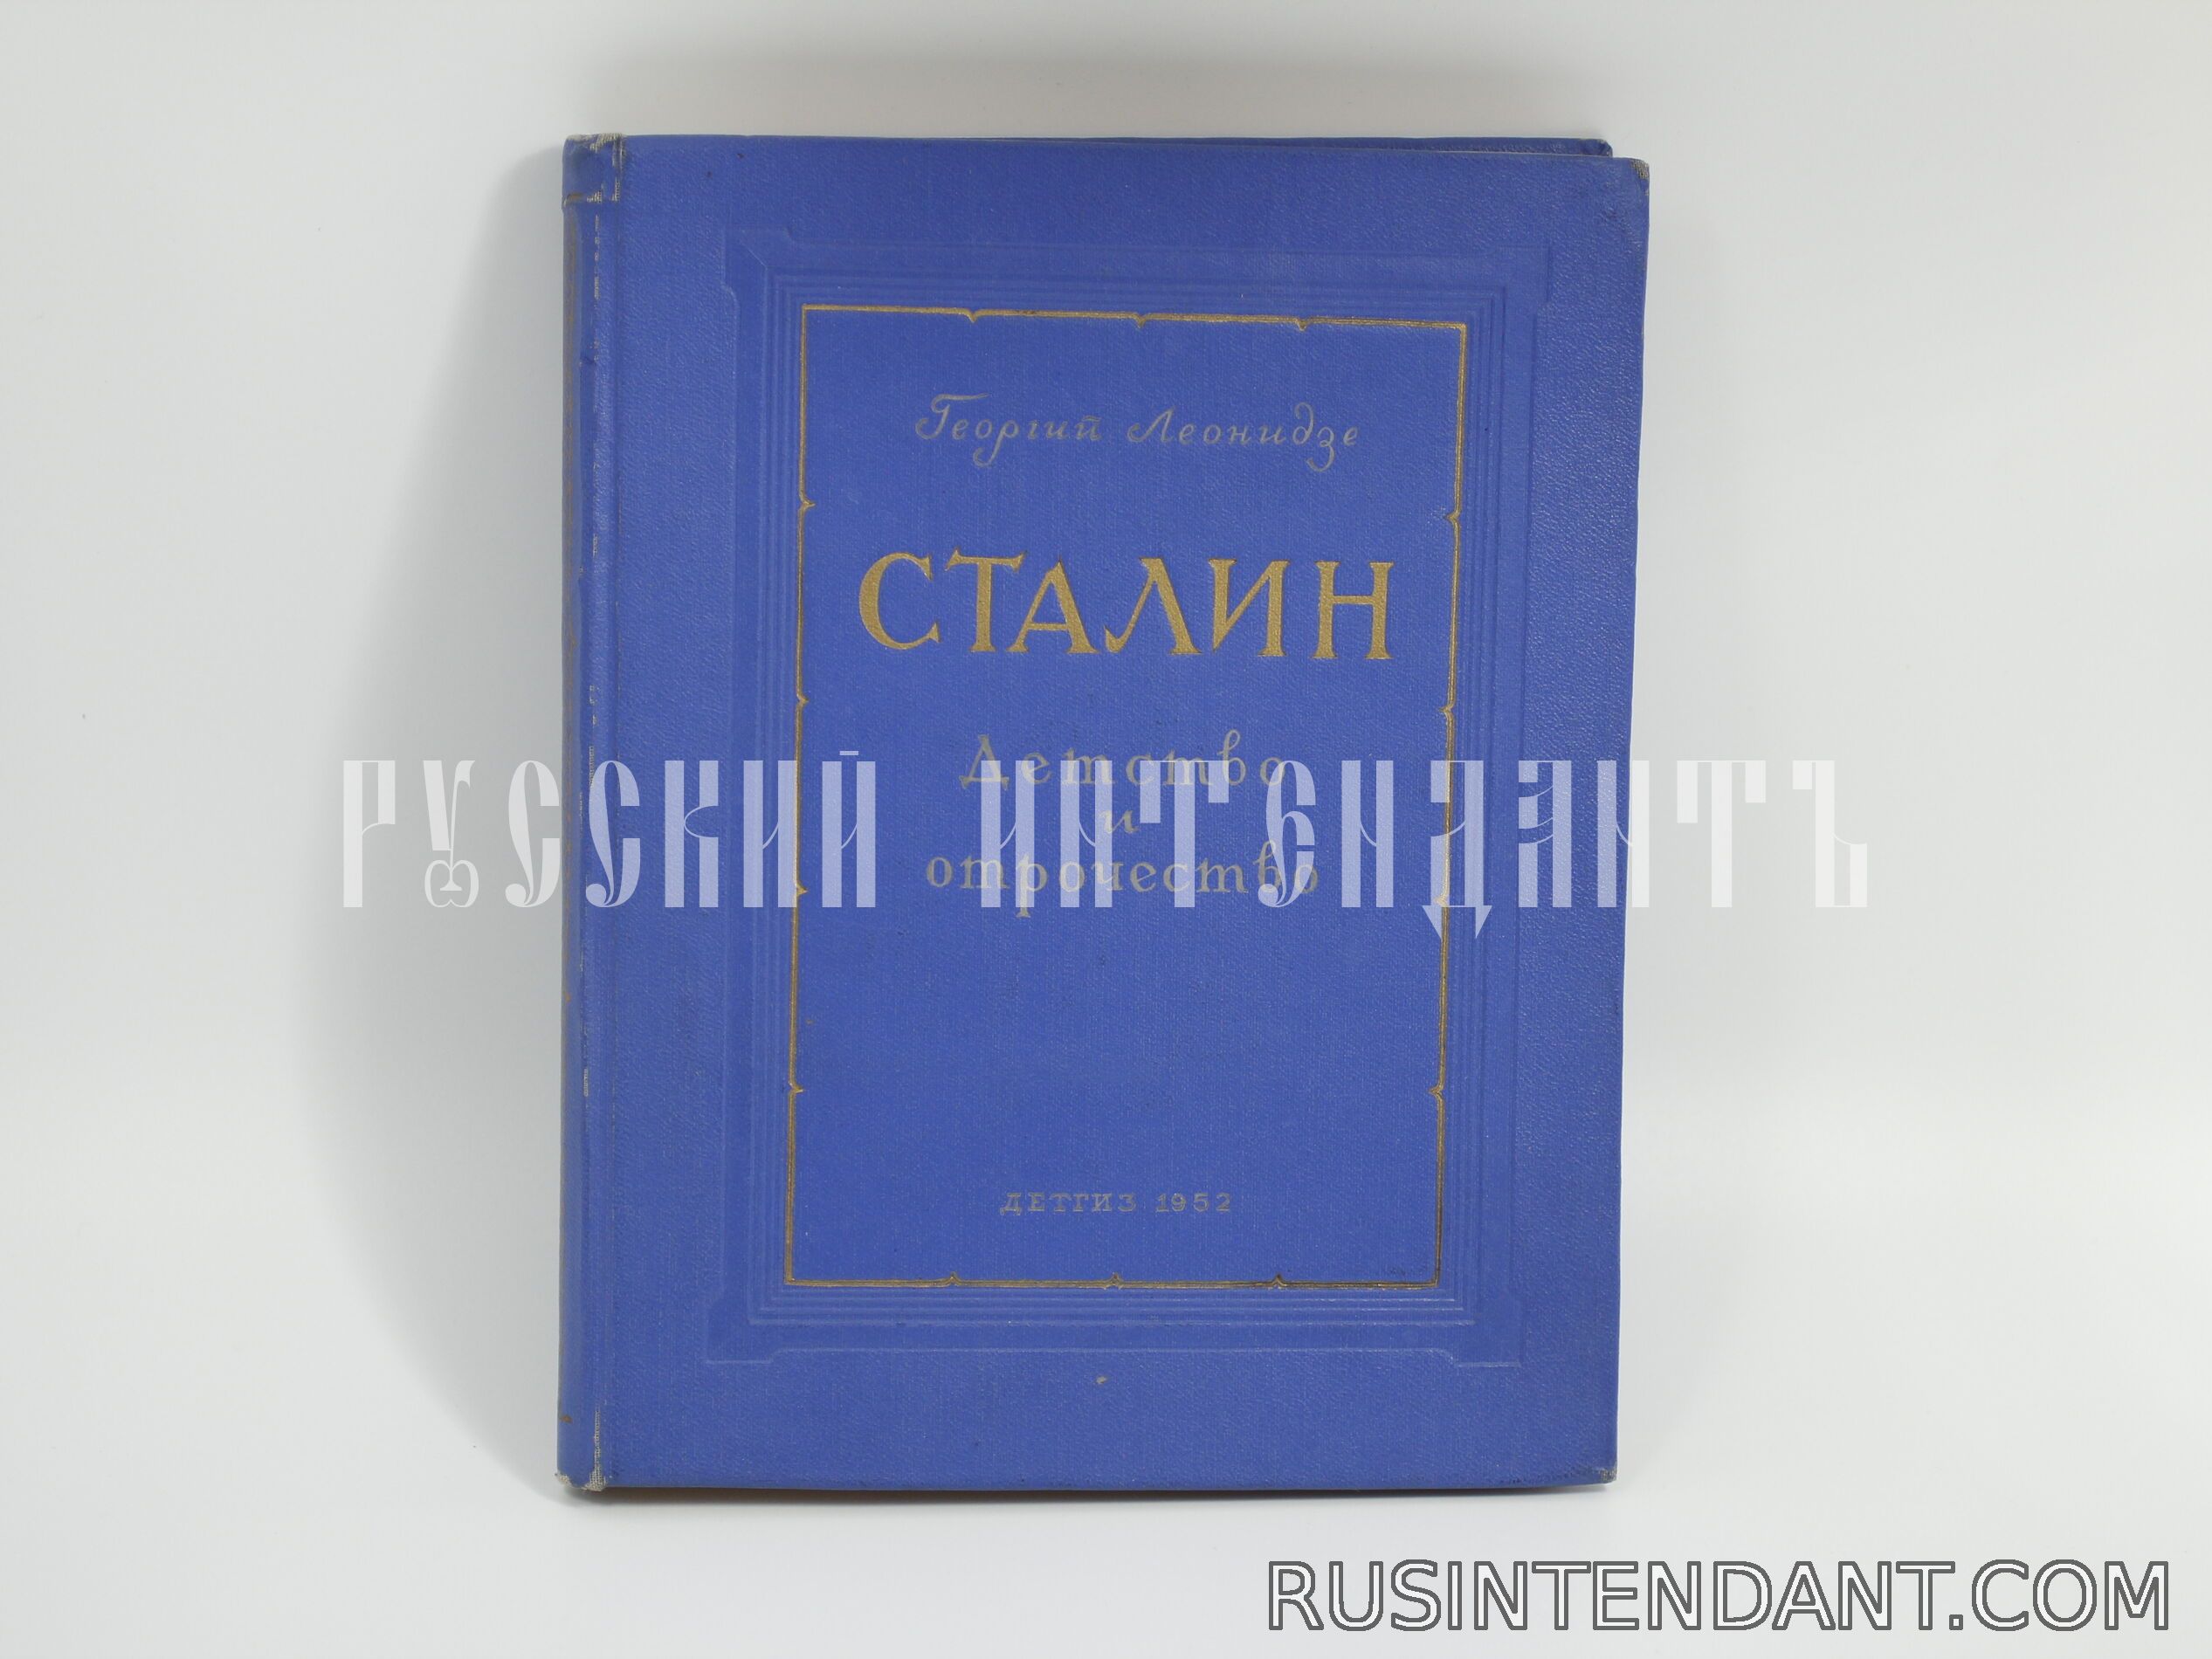 Фото 1: Книга «Сталин» Георгия Леонидзе 